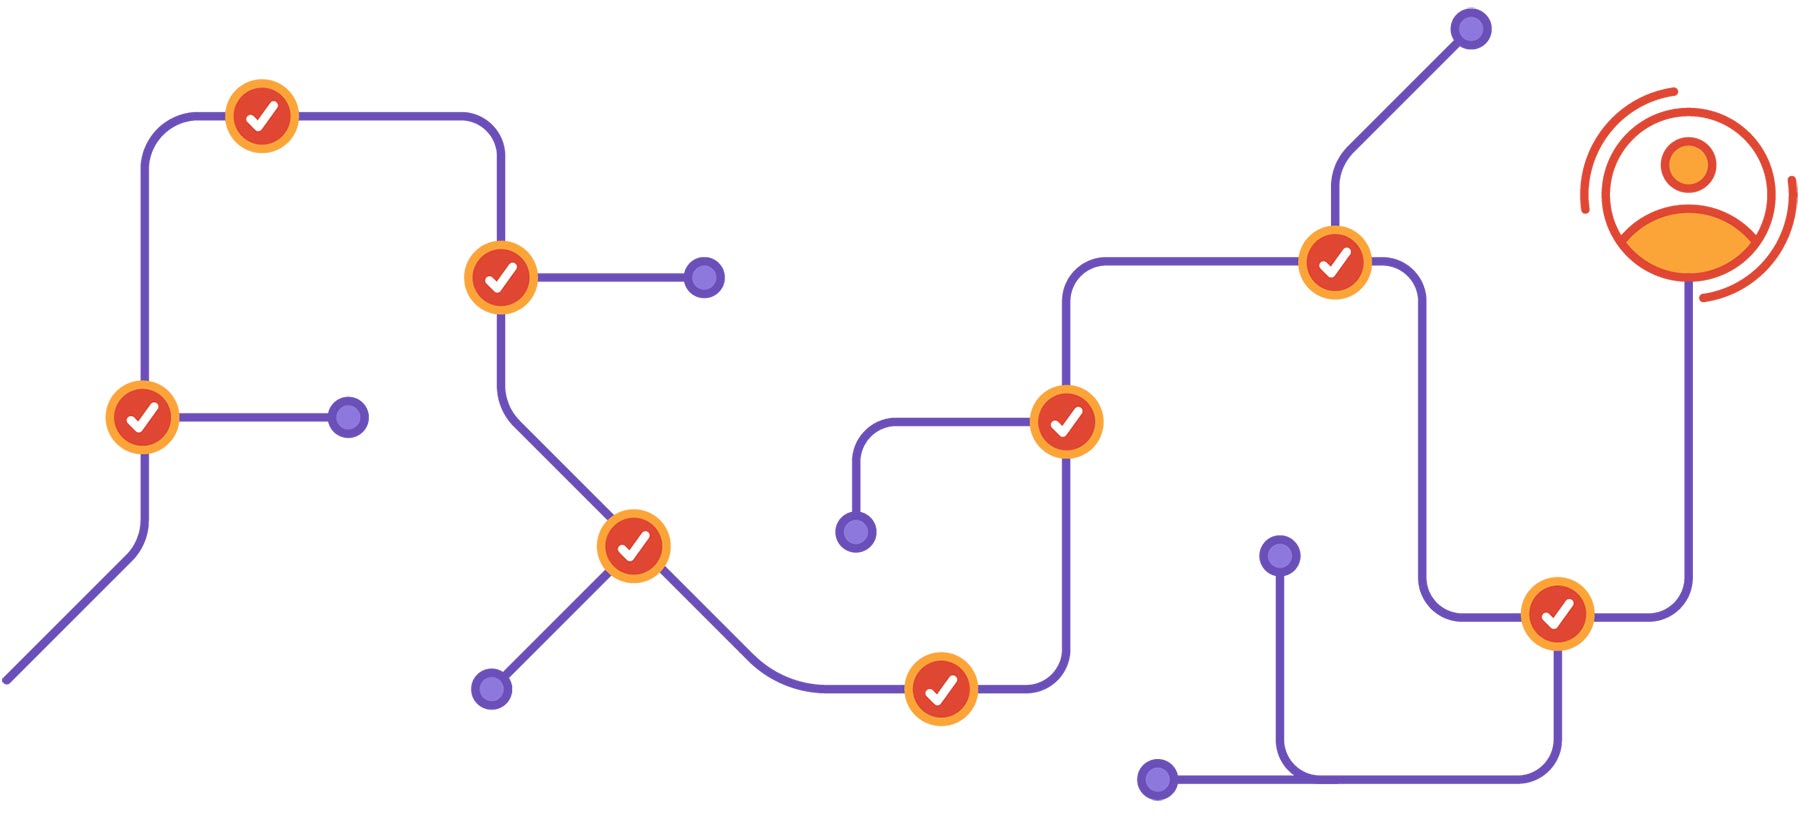 GitLab customer path illustration